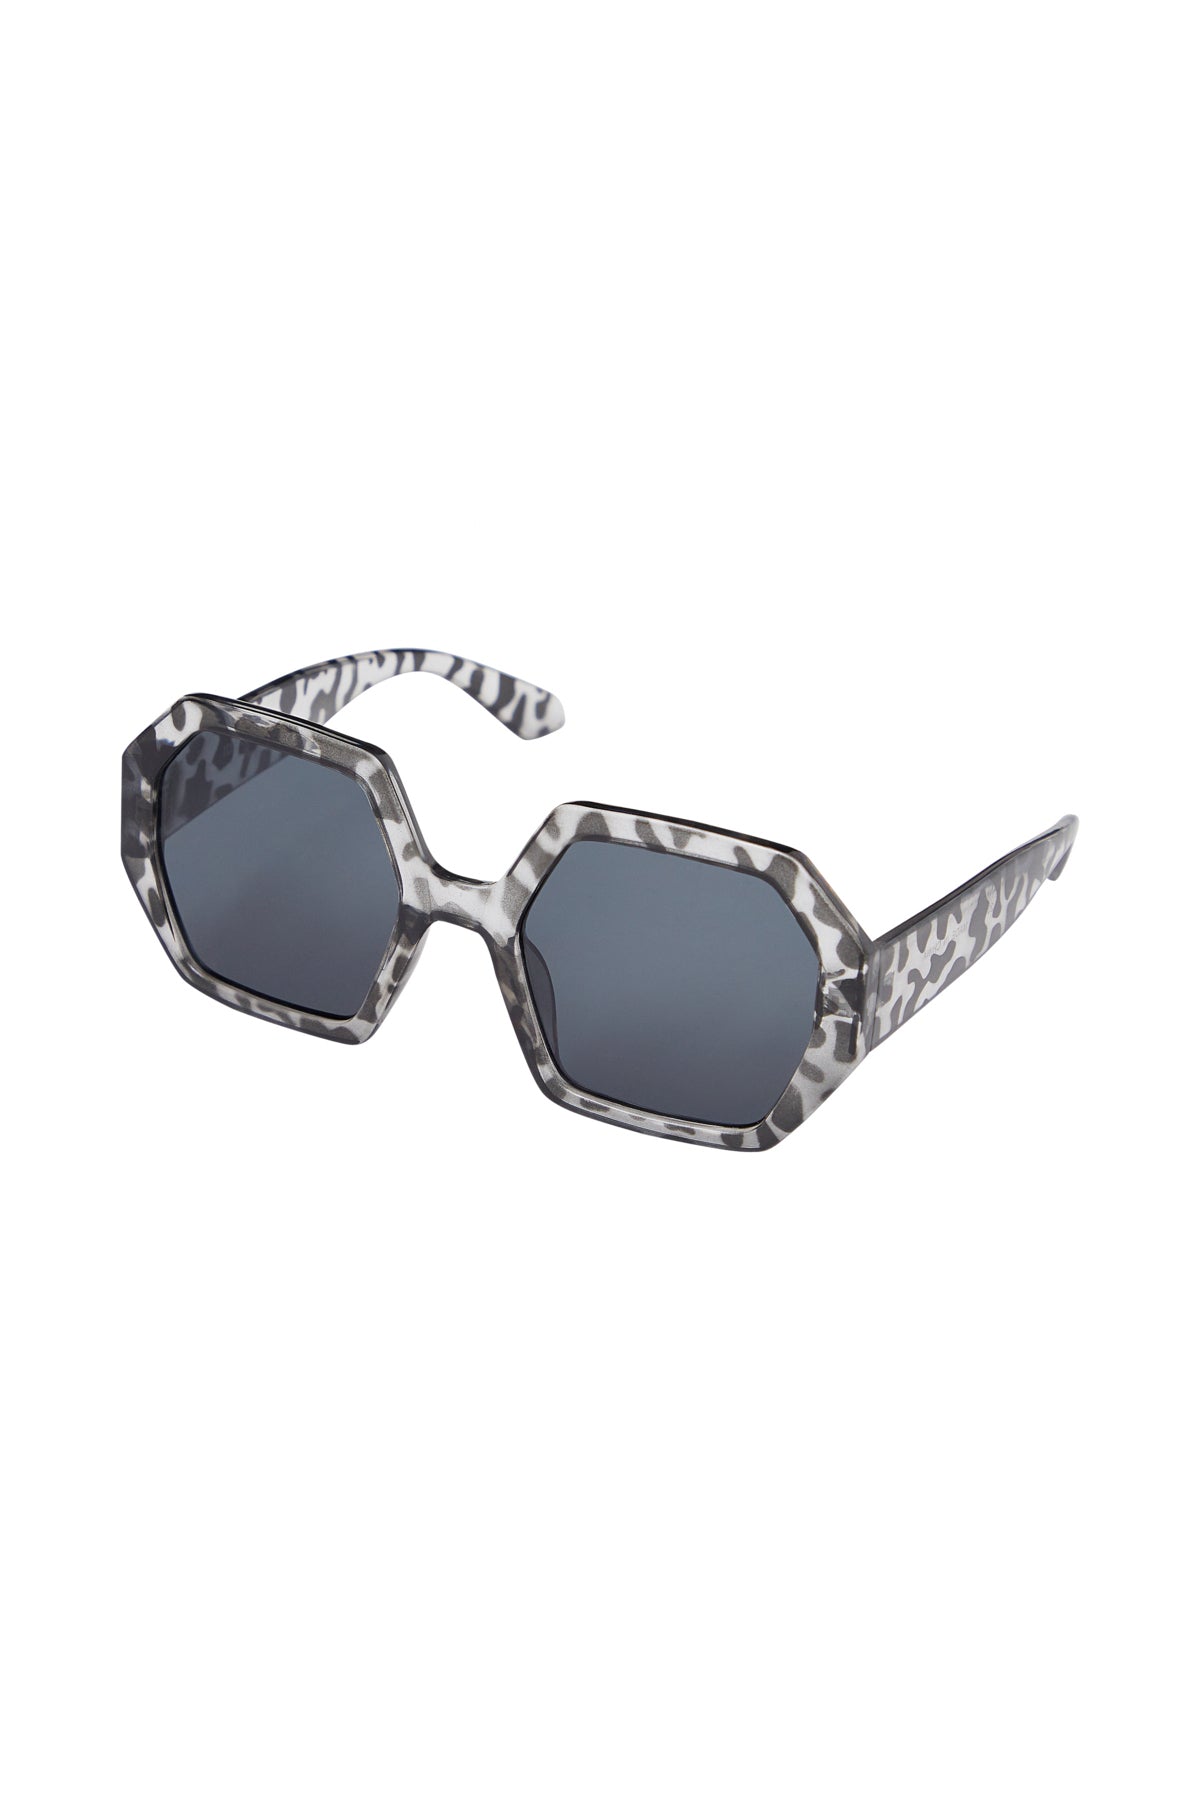 ICHI - Sunglasses Leestina Ultimate Gray/Black